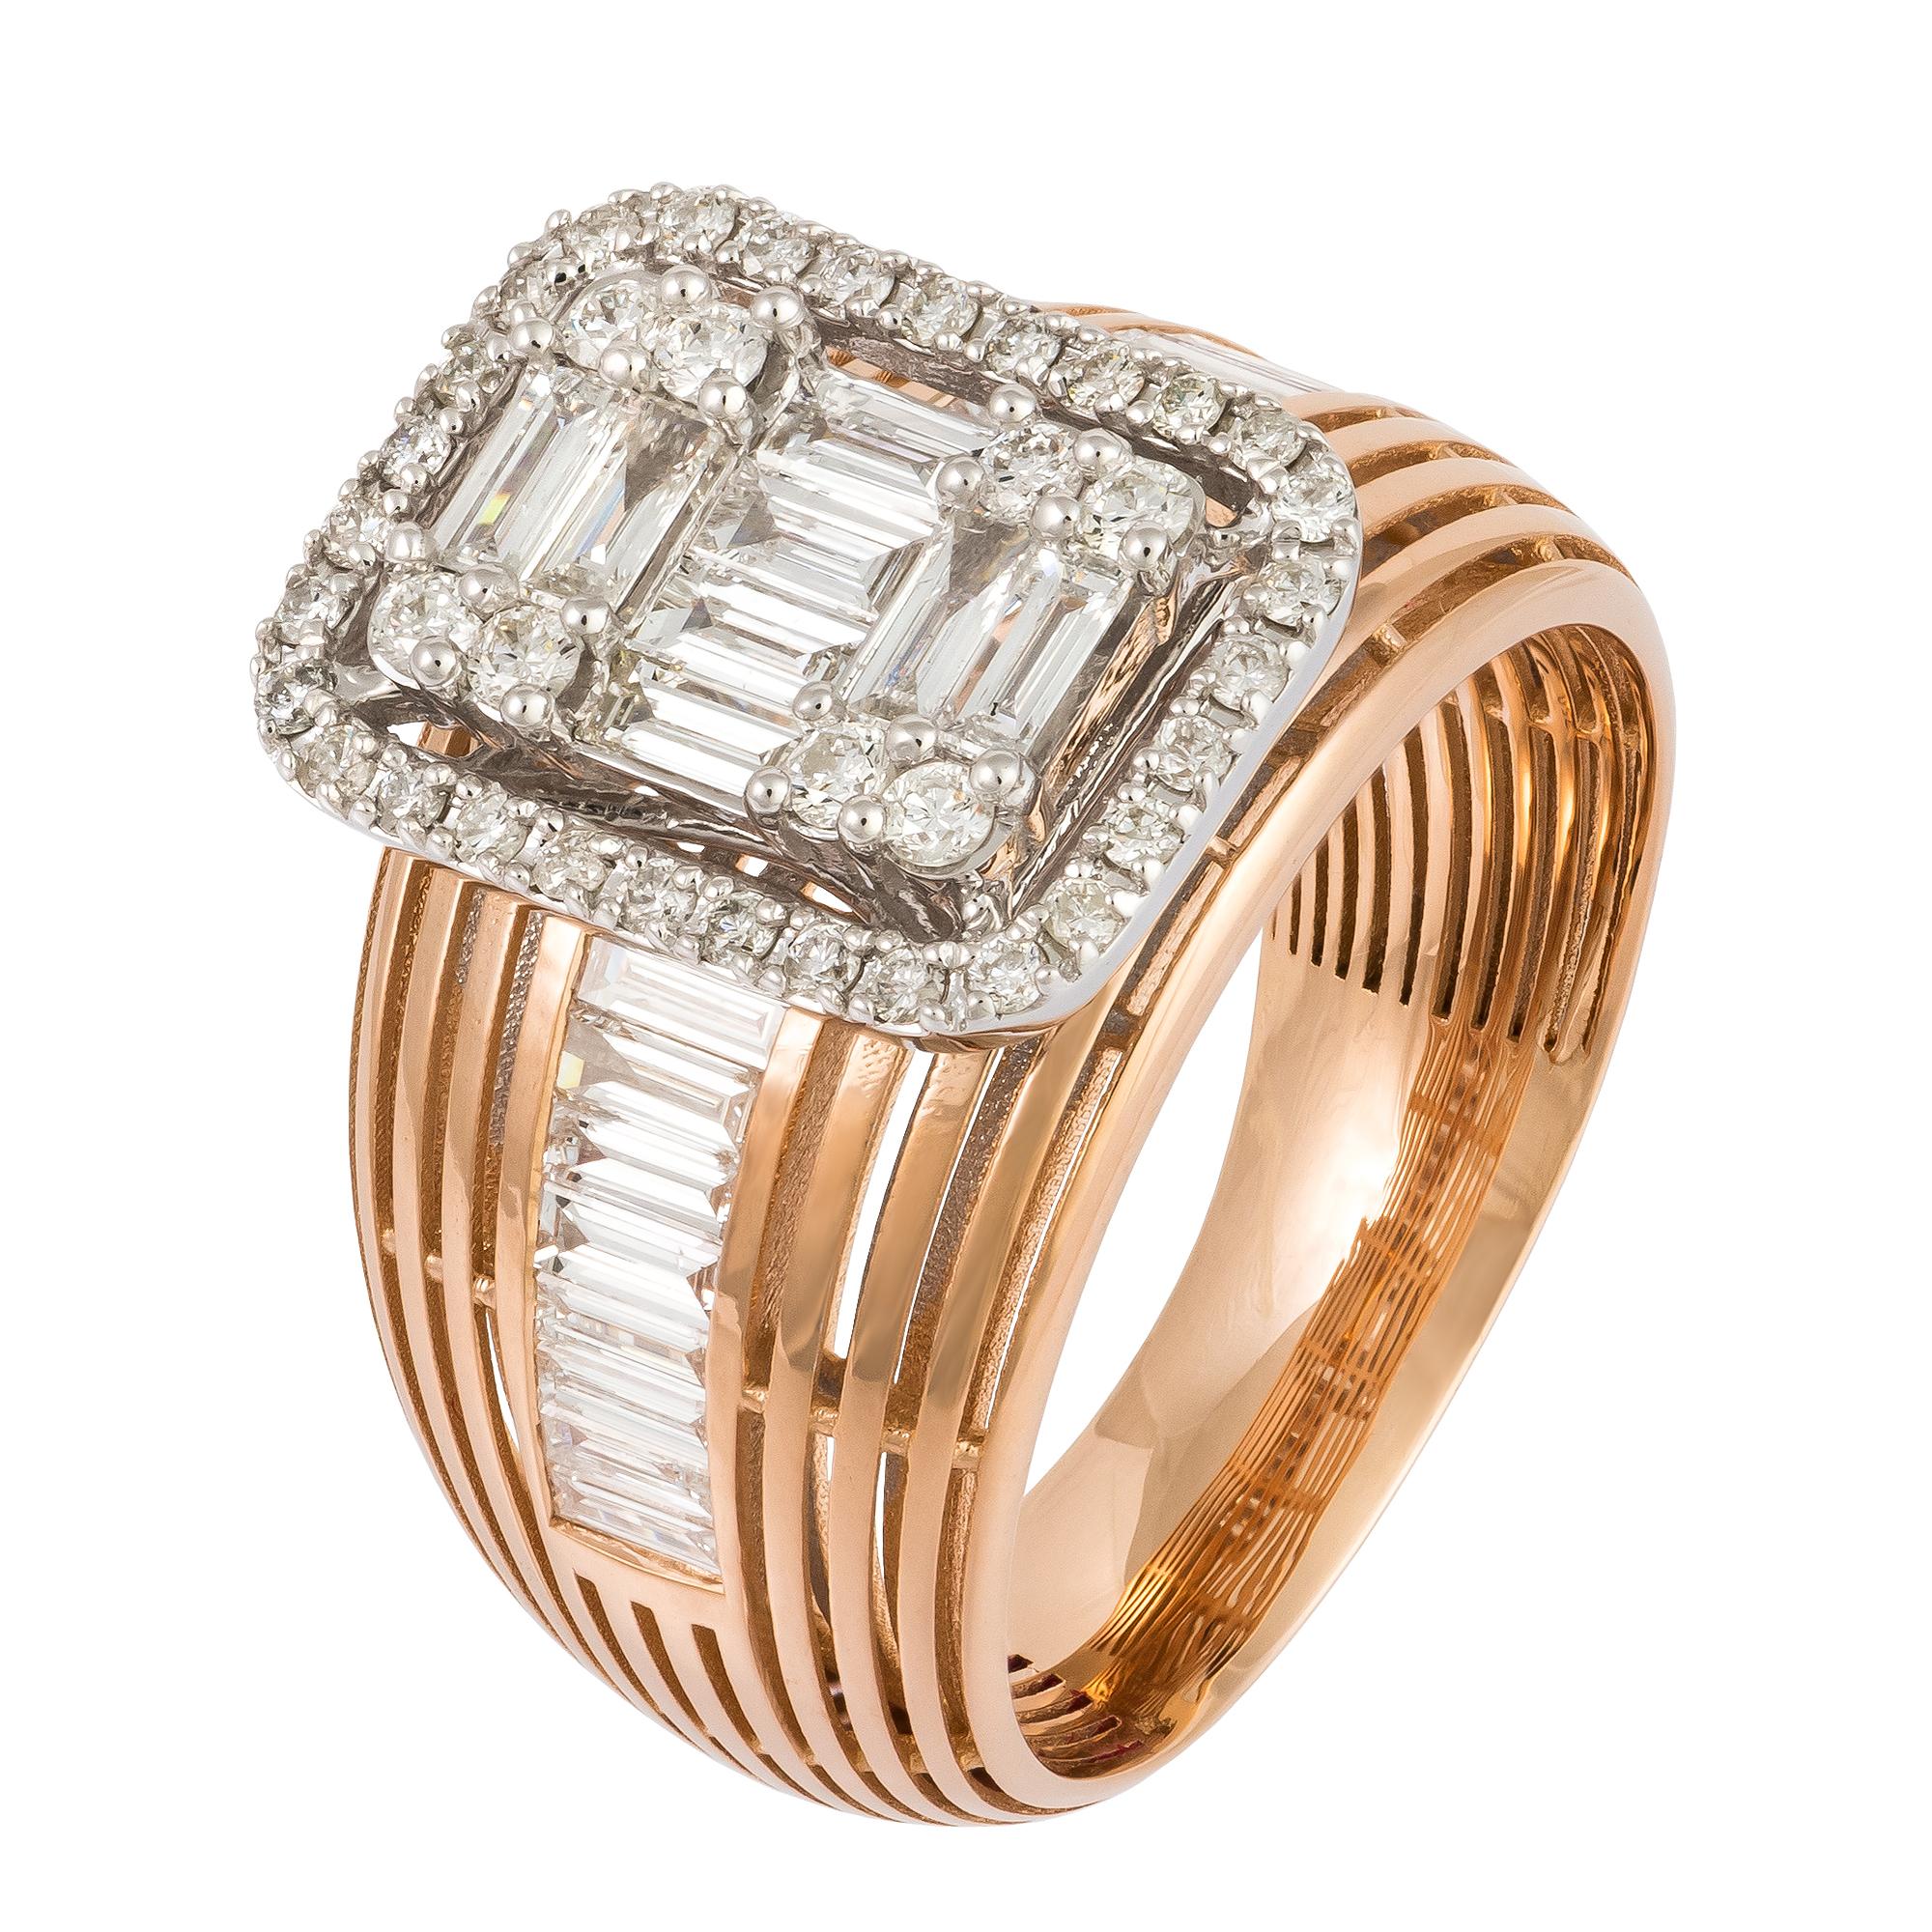 For Sale:  Monumental White Pink 18K Gold White Diamond Ring for Her 4